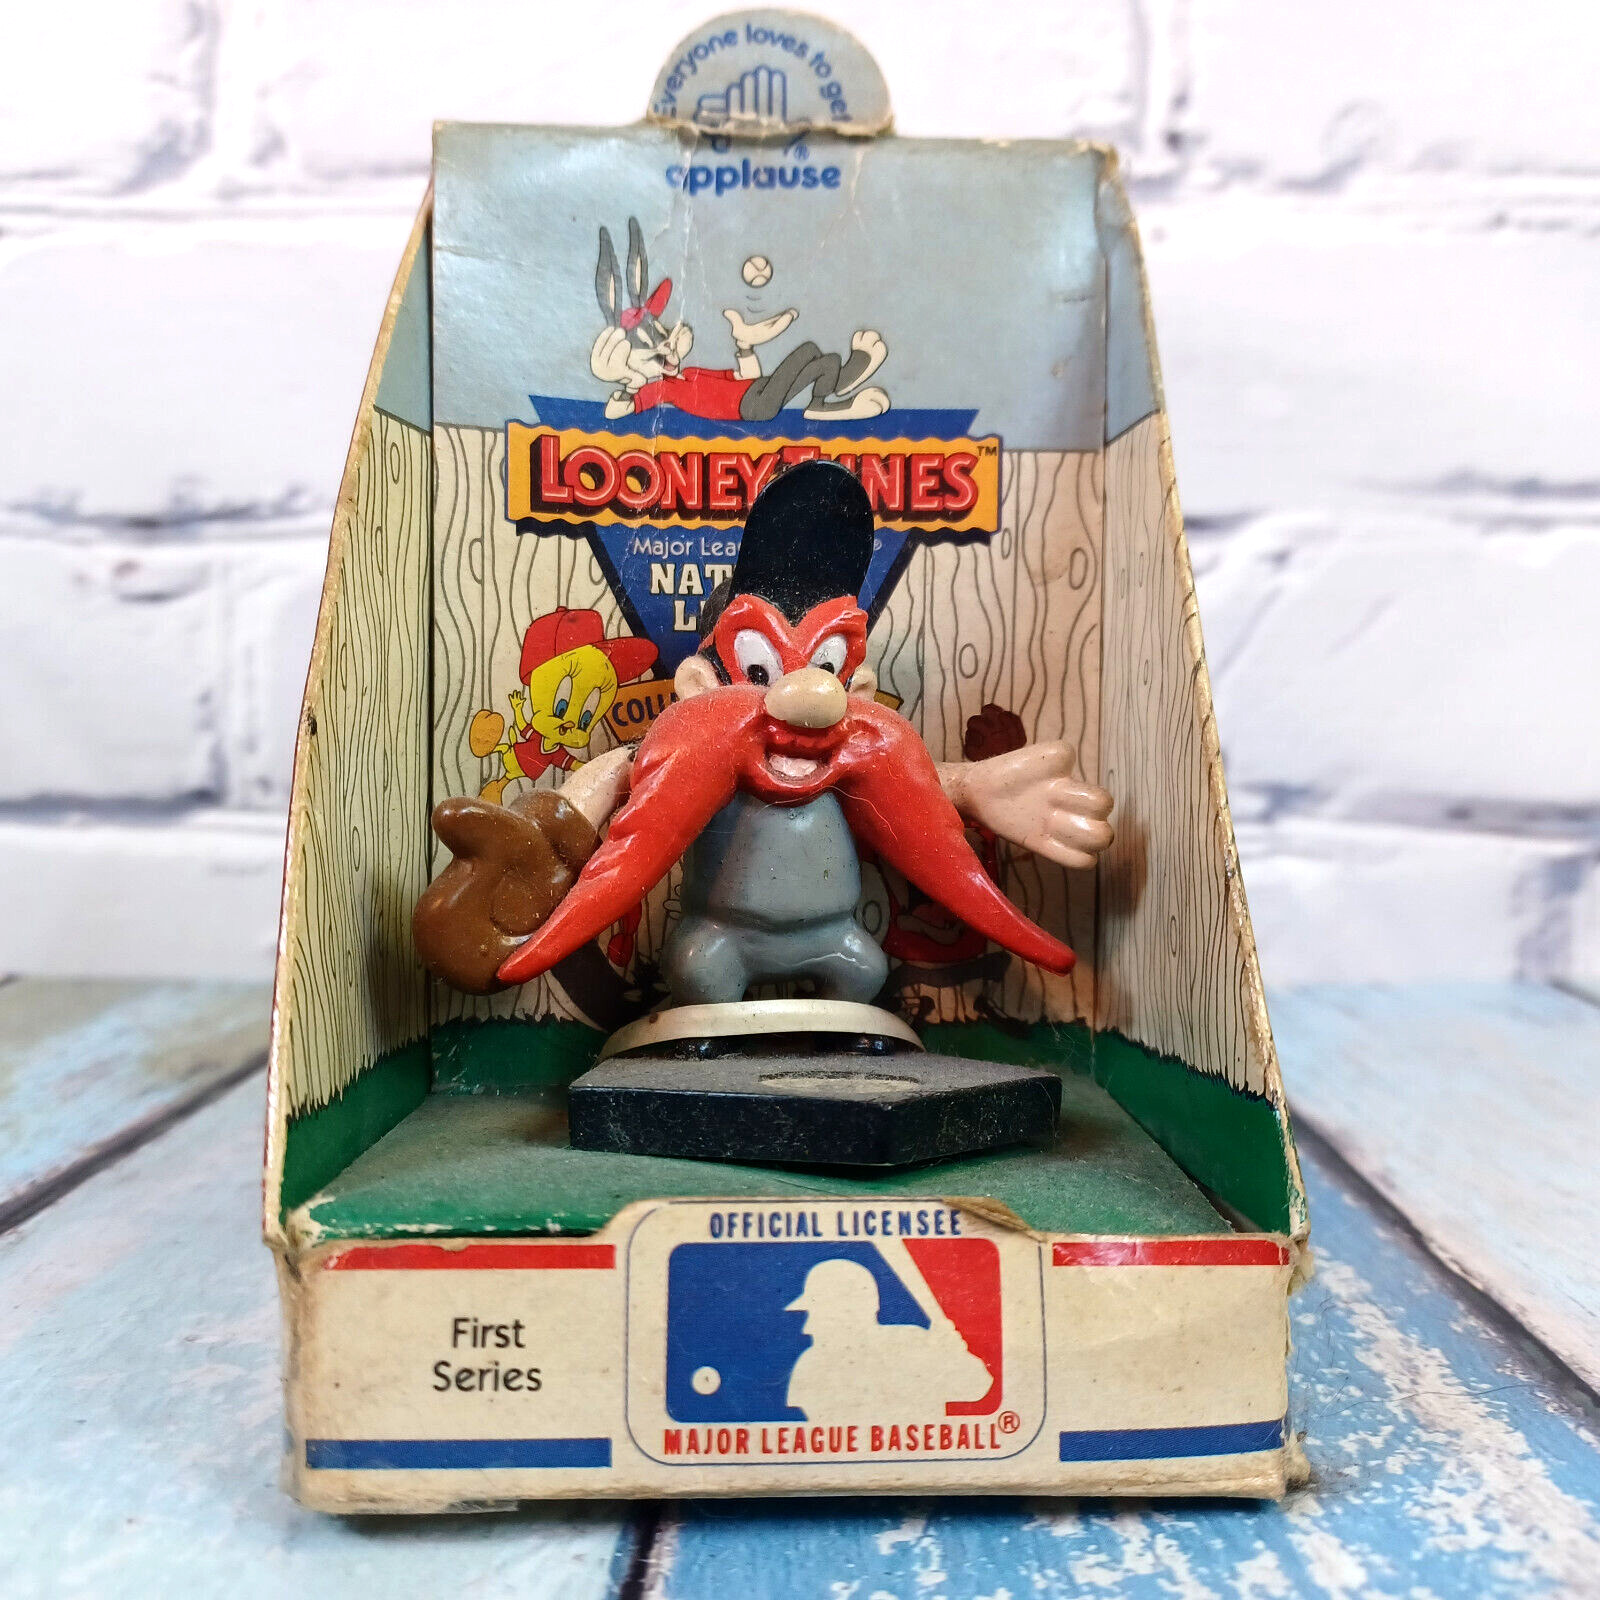 APPLAUSE Yosemite Sam MLB Pittsburgh Pirates Collectable Figurine-1990-NIB